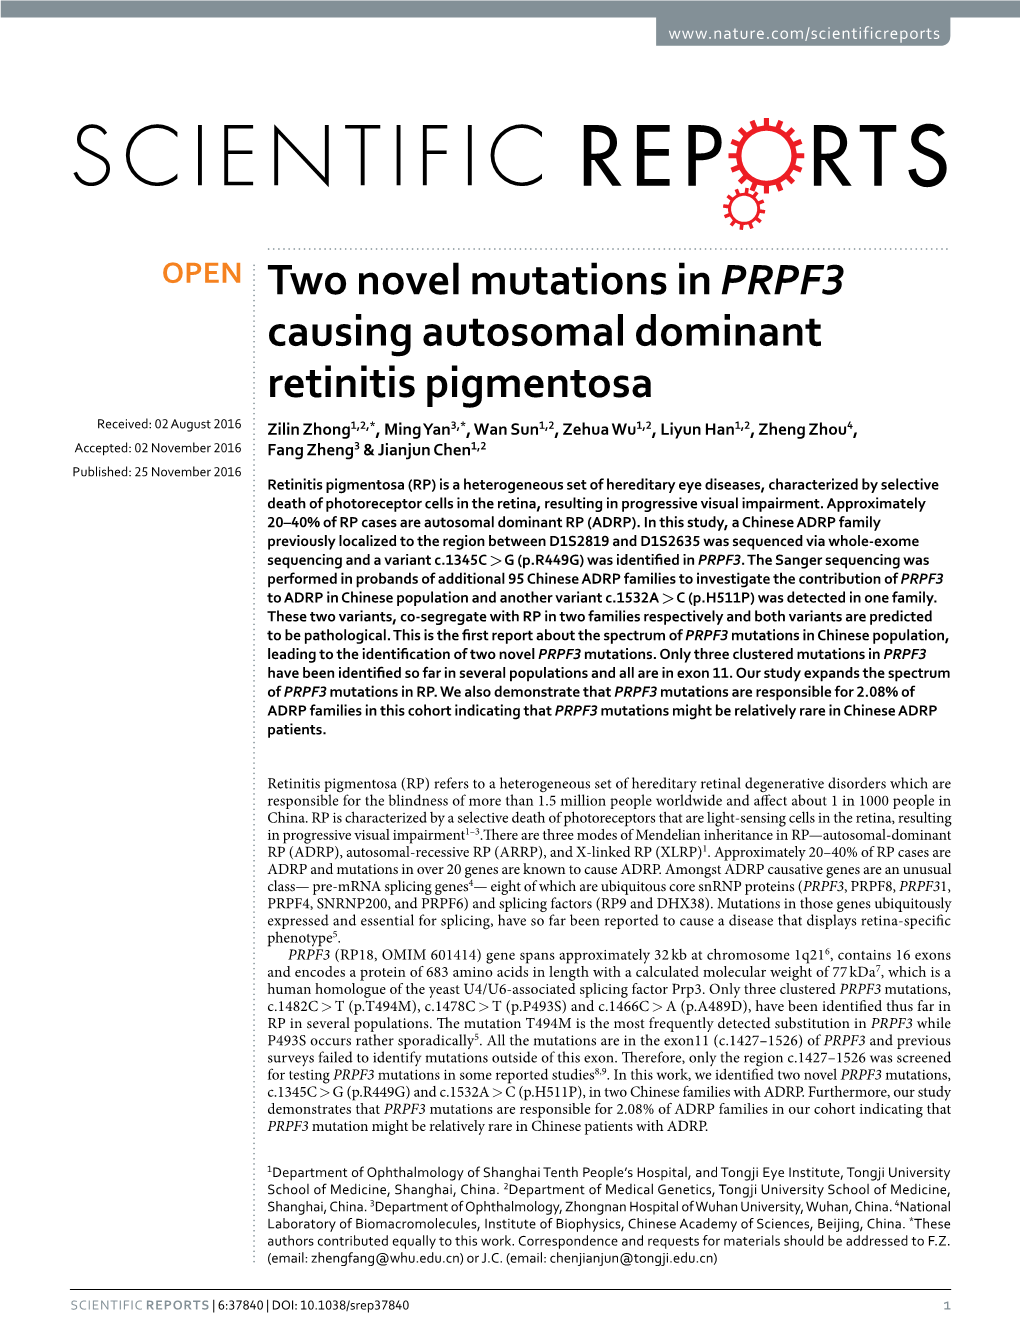 Two Novel Mutations in PRPF3 Causing Autosomal Dominant